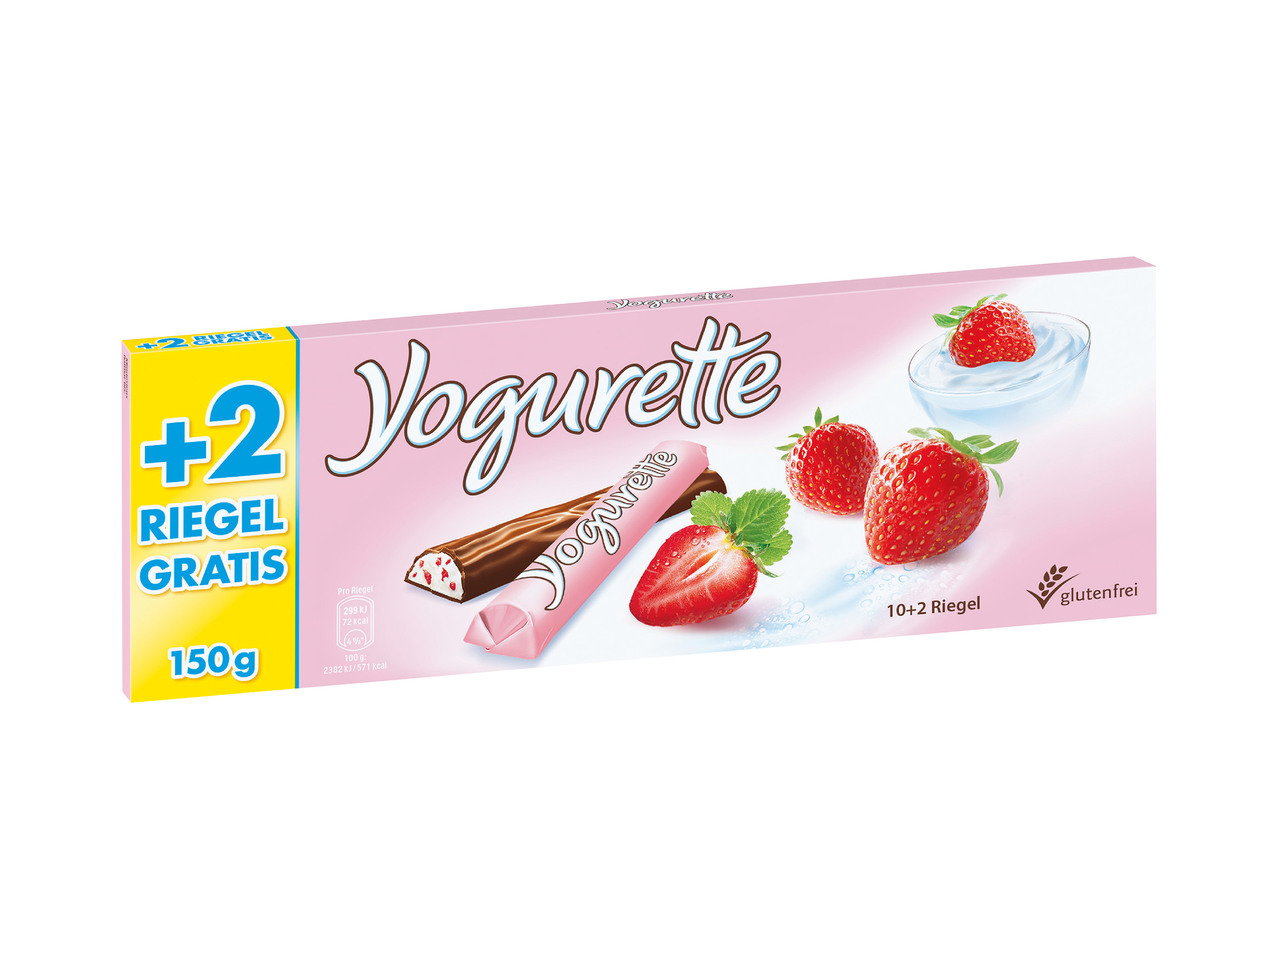 Yogurette / Kinder Schokolade